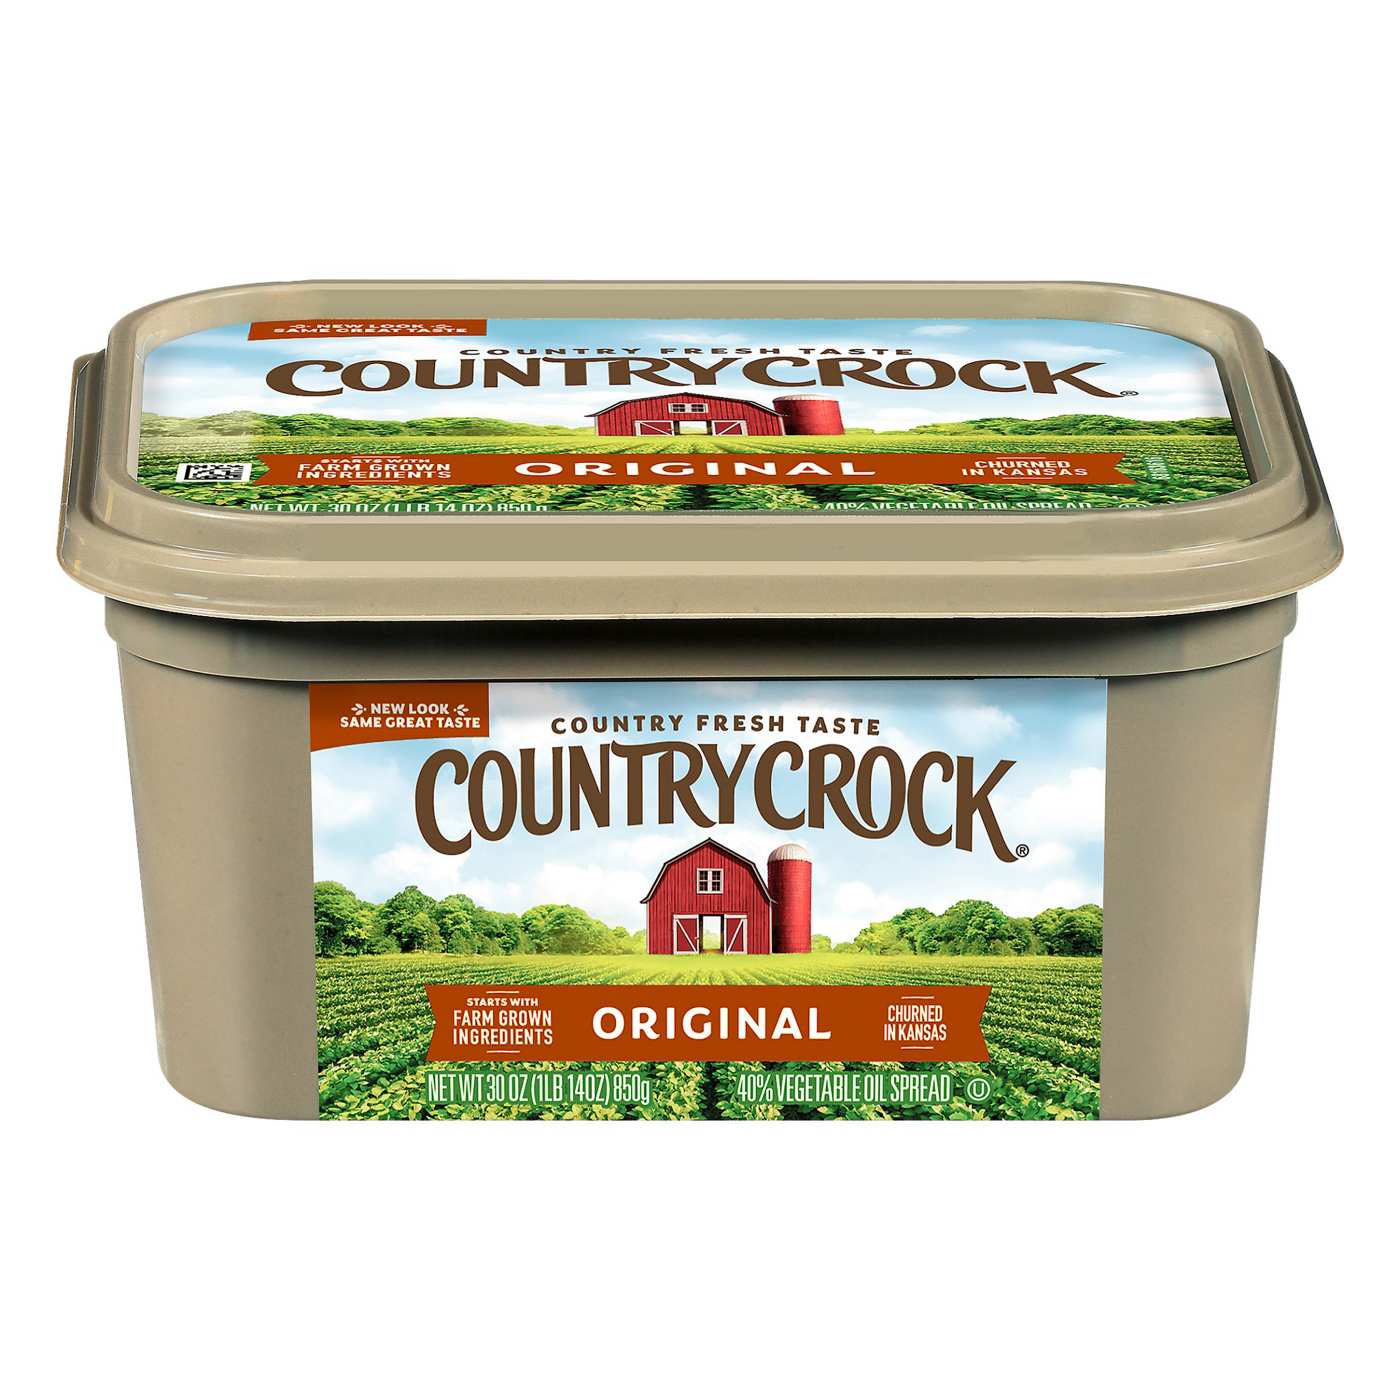 Country Crock Original Vegetable Oil Spread; image 3 of 9